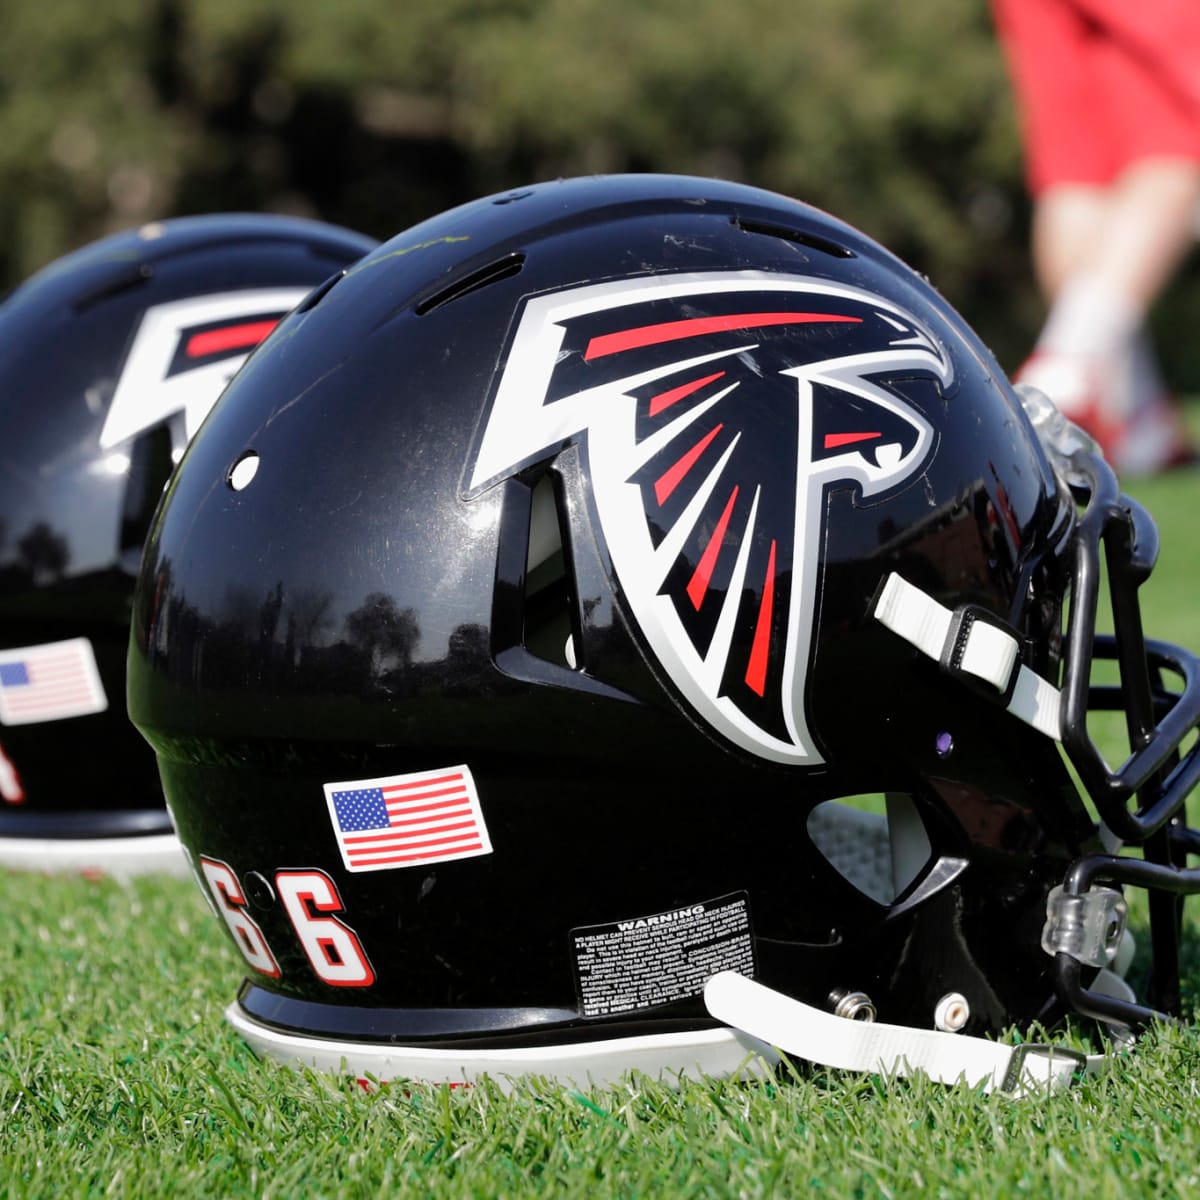 Atlanta Falcons rumors: Throwback uniforms expected in 2016